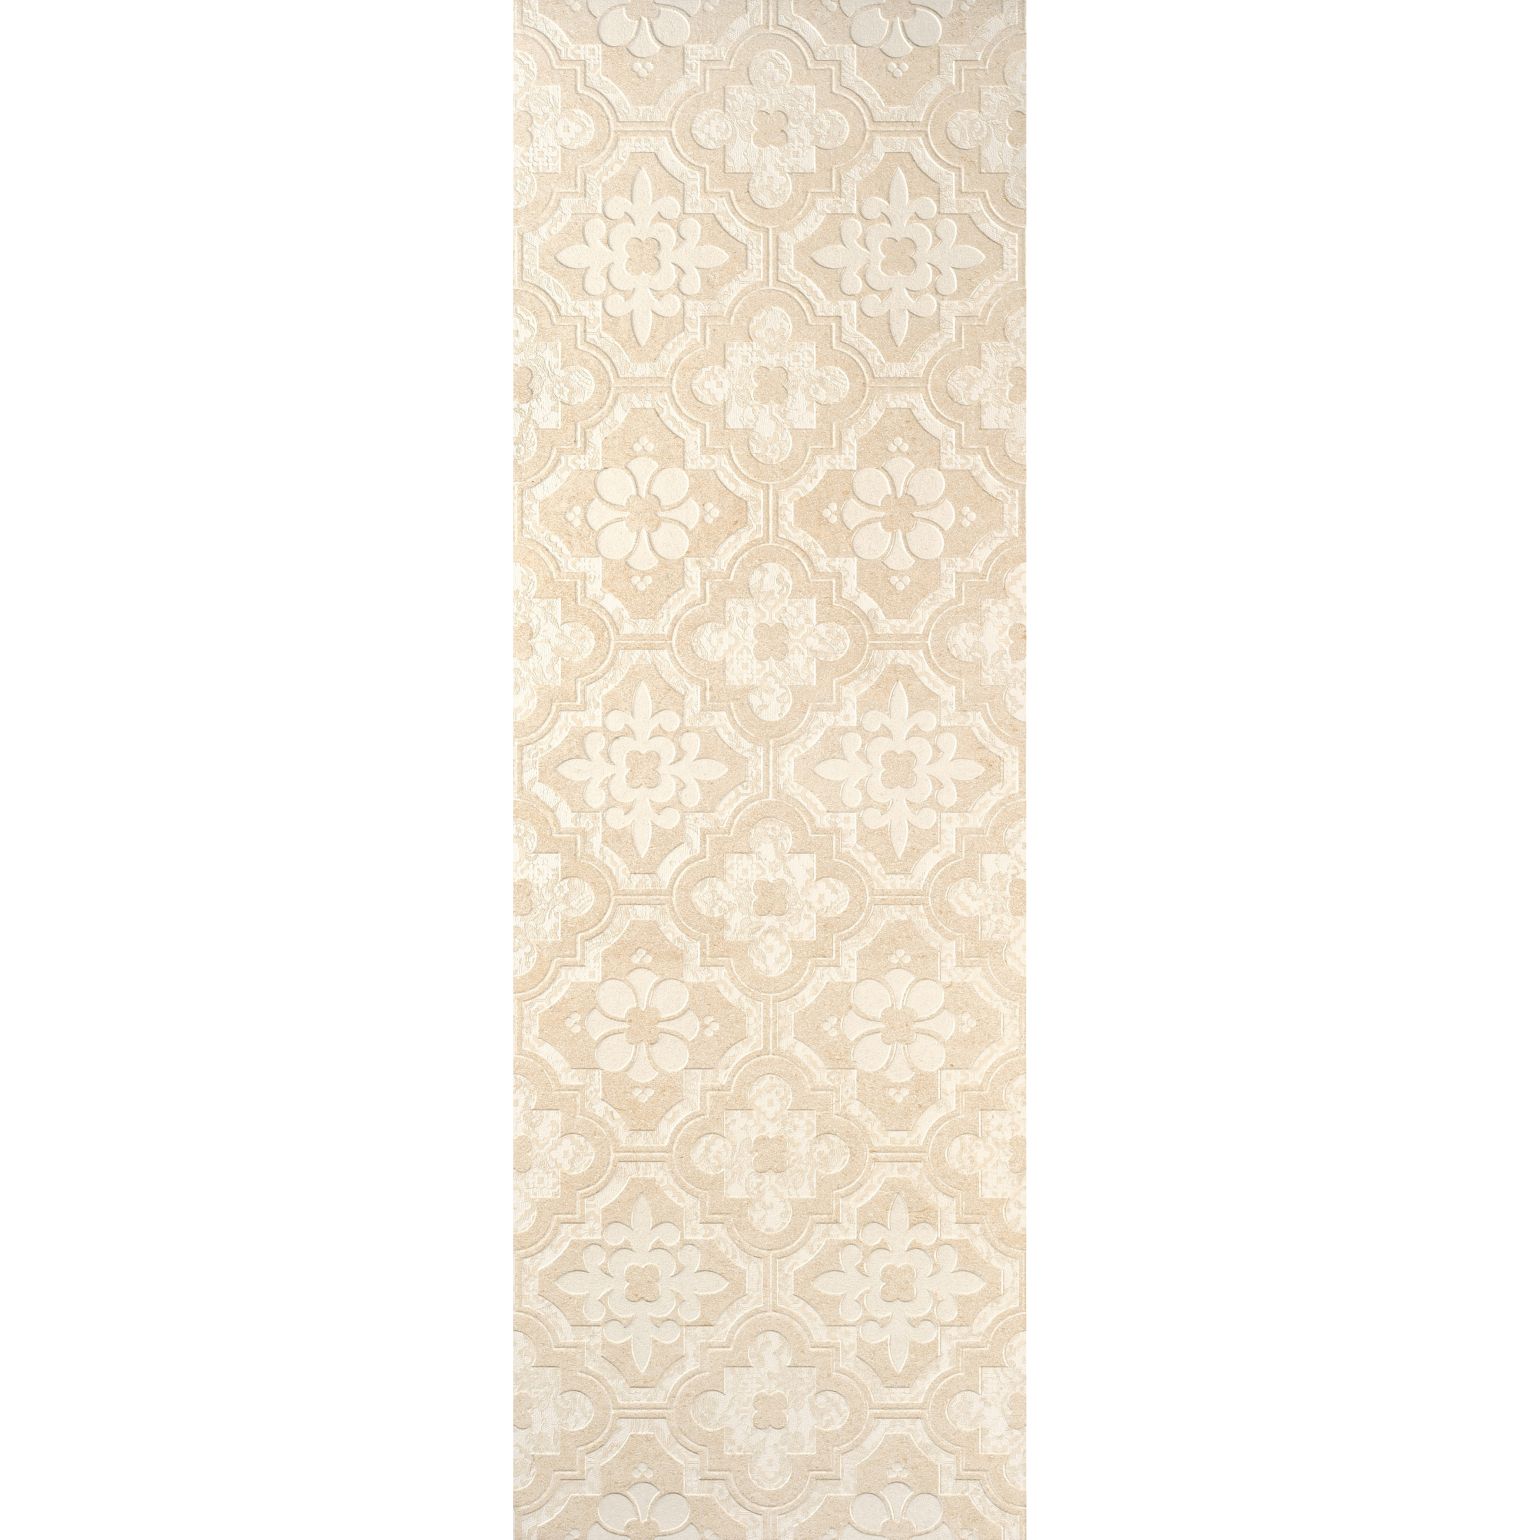 Настенная плитка Newker Rev.Base Cm Antique Ivory 40x120 см 133201-X